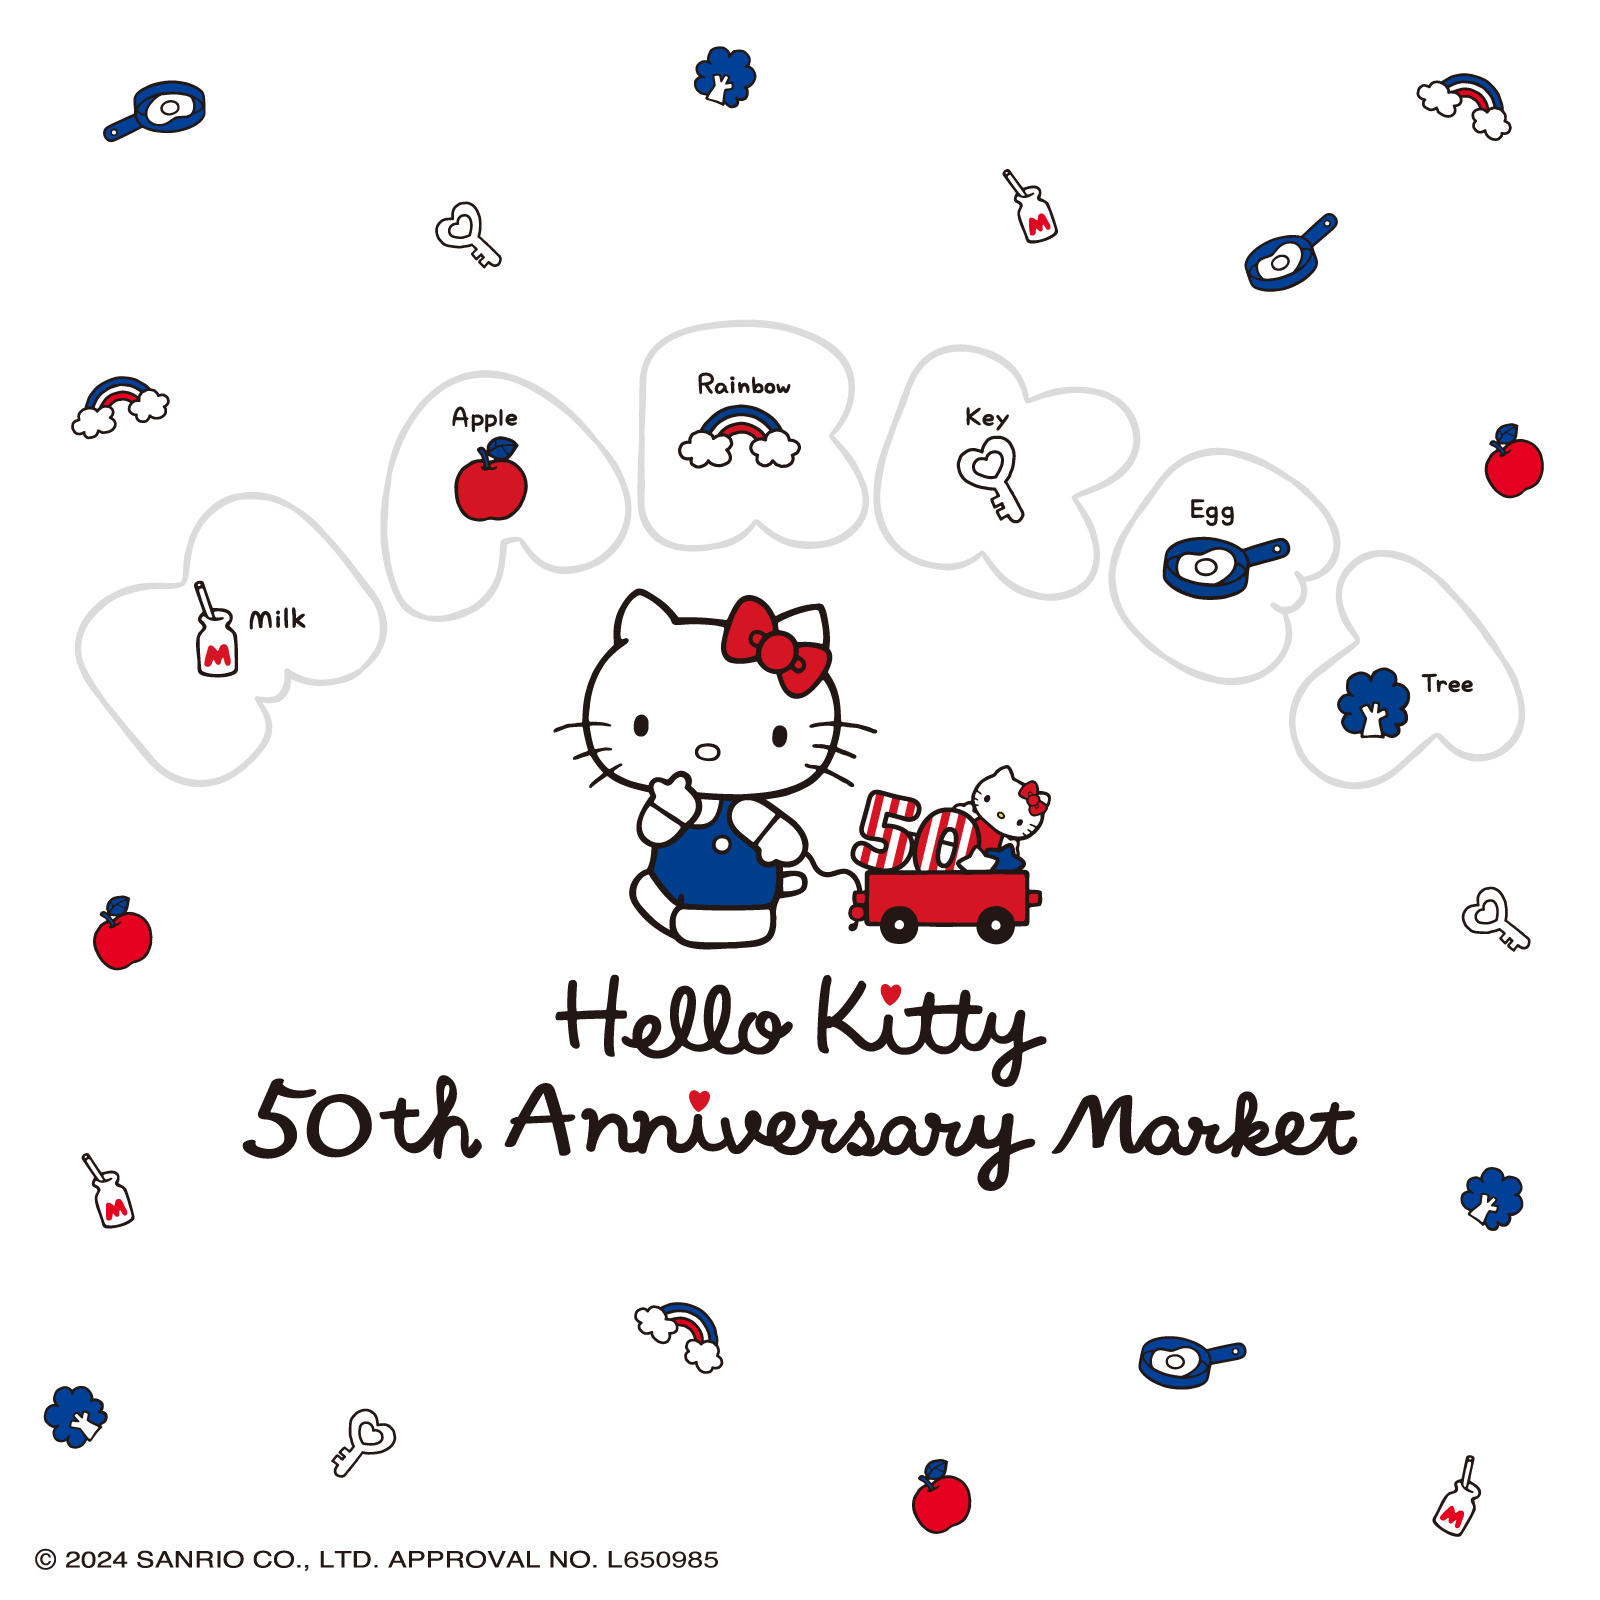 『Hello Kitty 50th Anniversary Market』開催のお知らせ